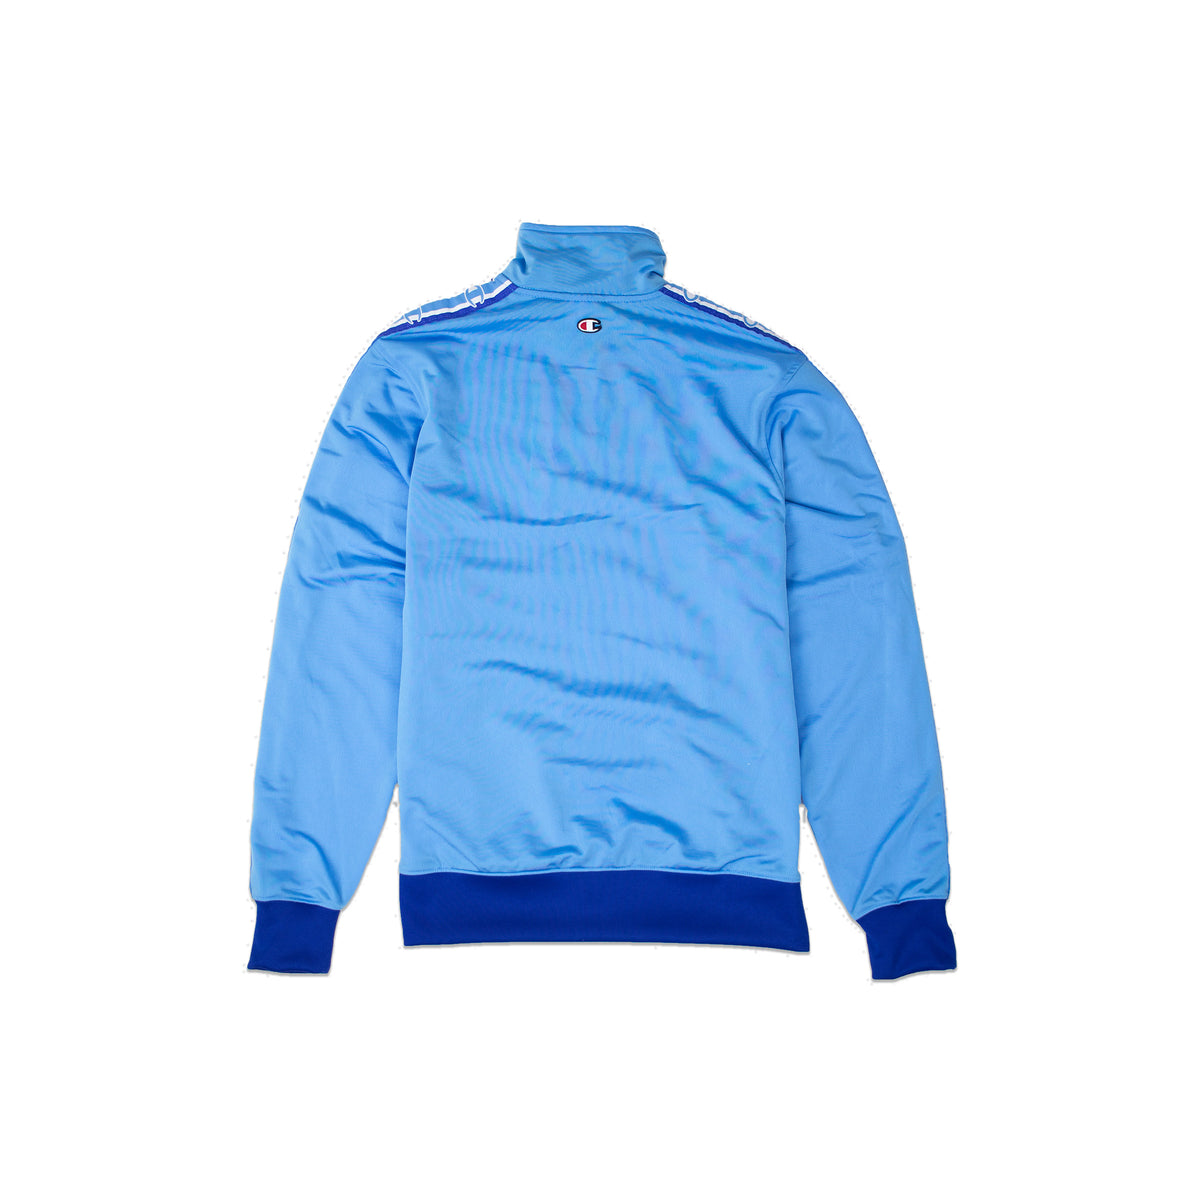 champion blue track jacket